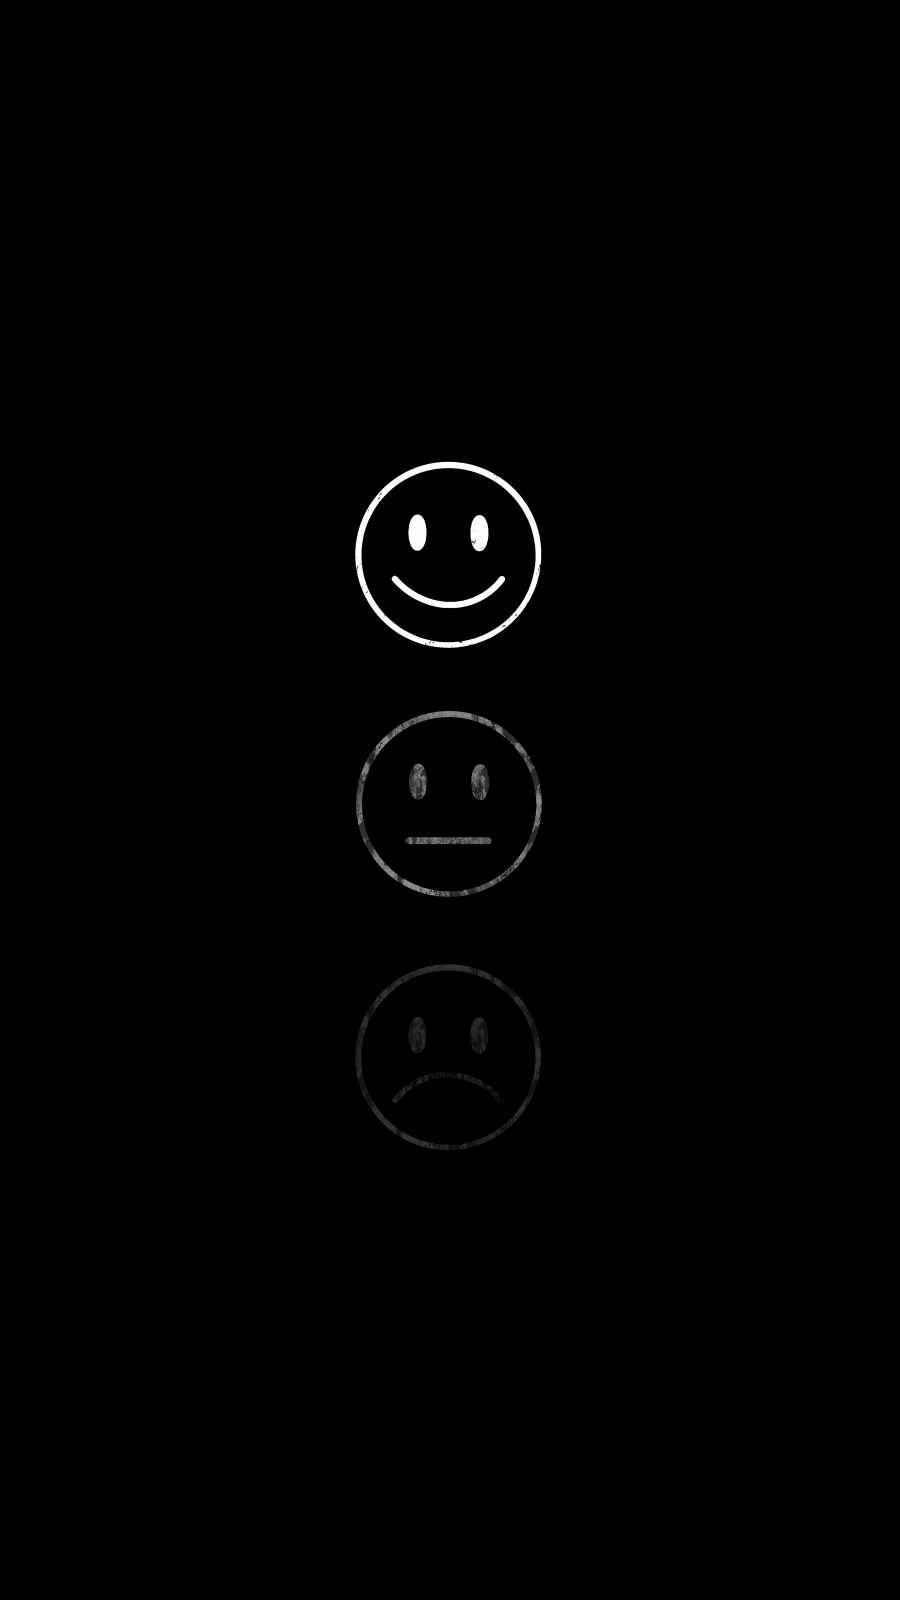 Sad Emojis Iphone Wallpaper